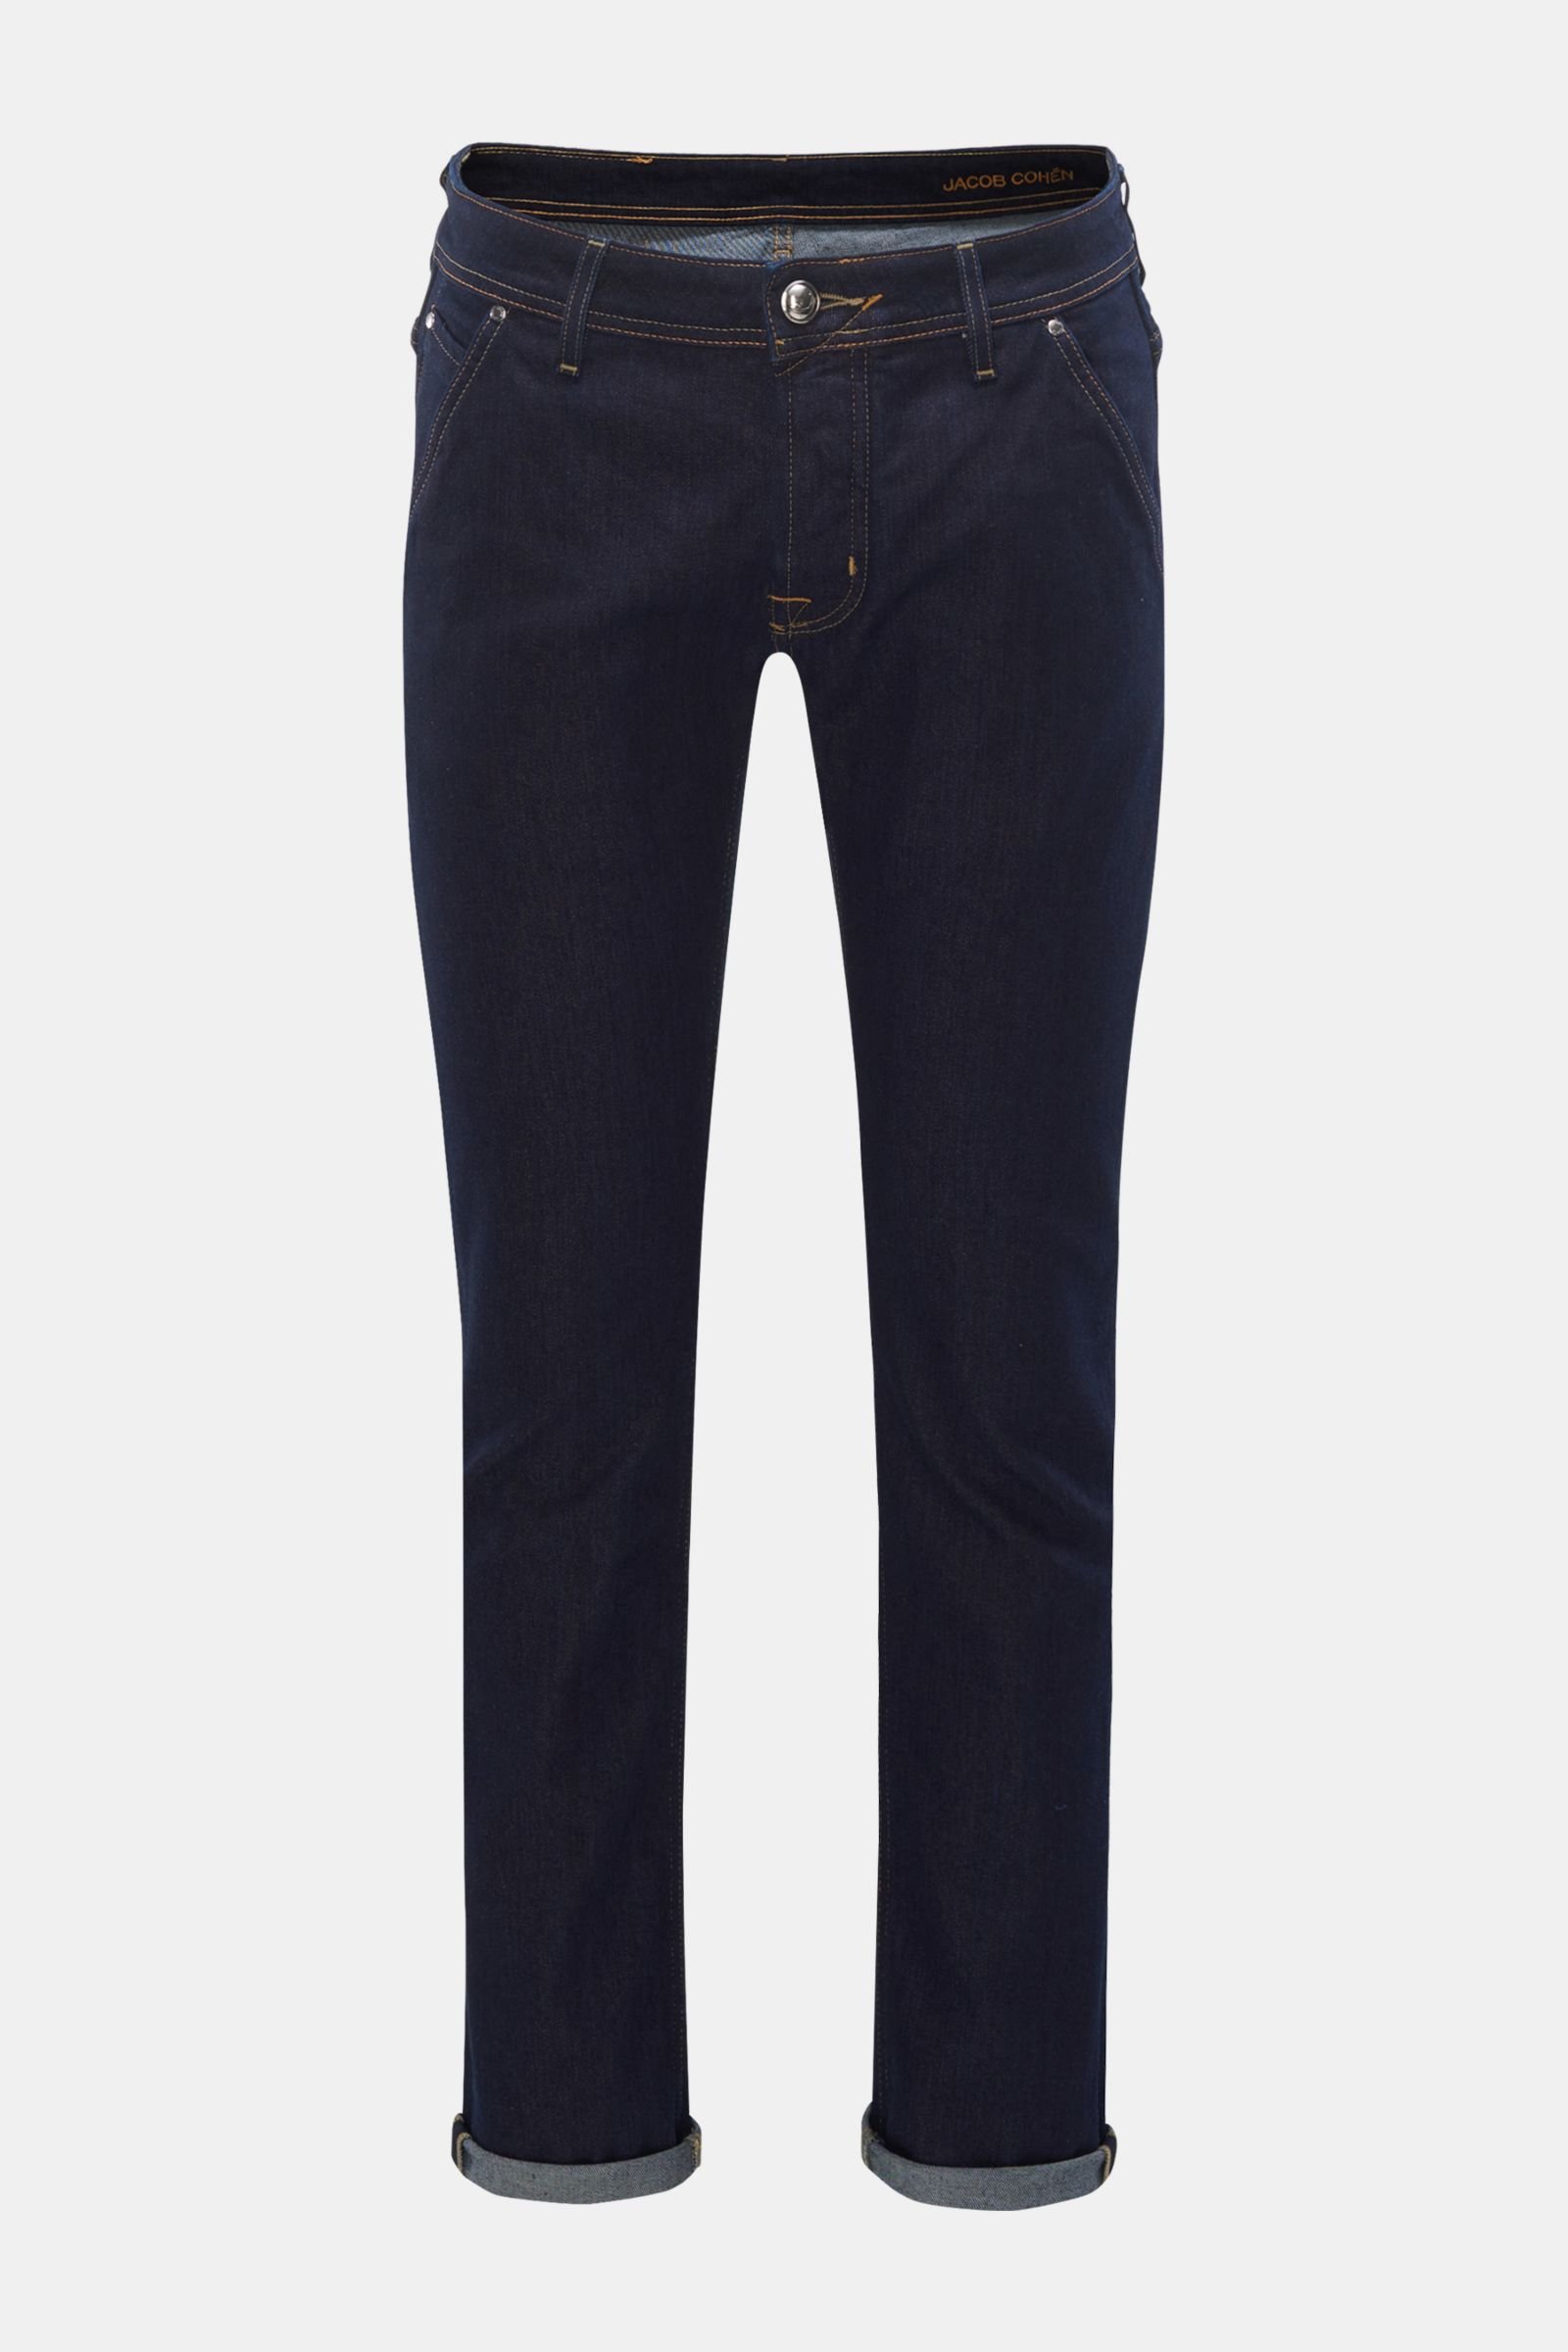 Jeans 'J613 Comfort Slim Fit' navy